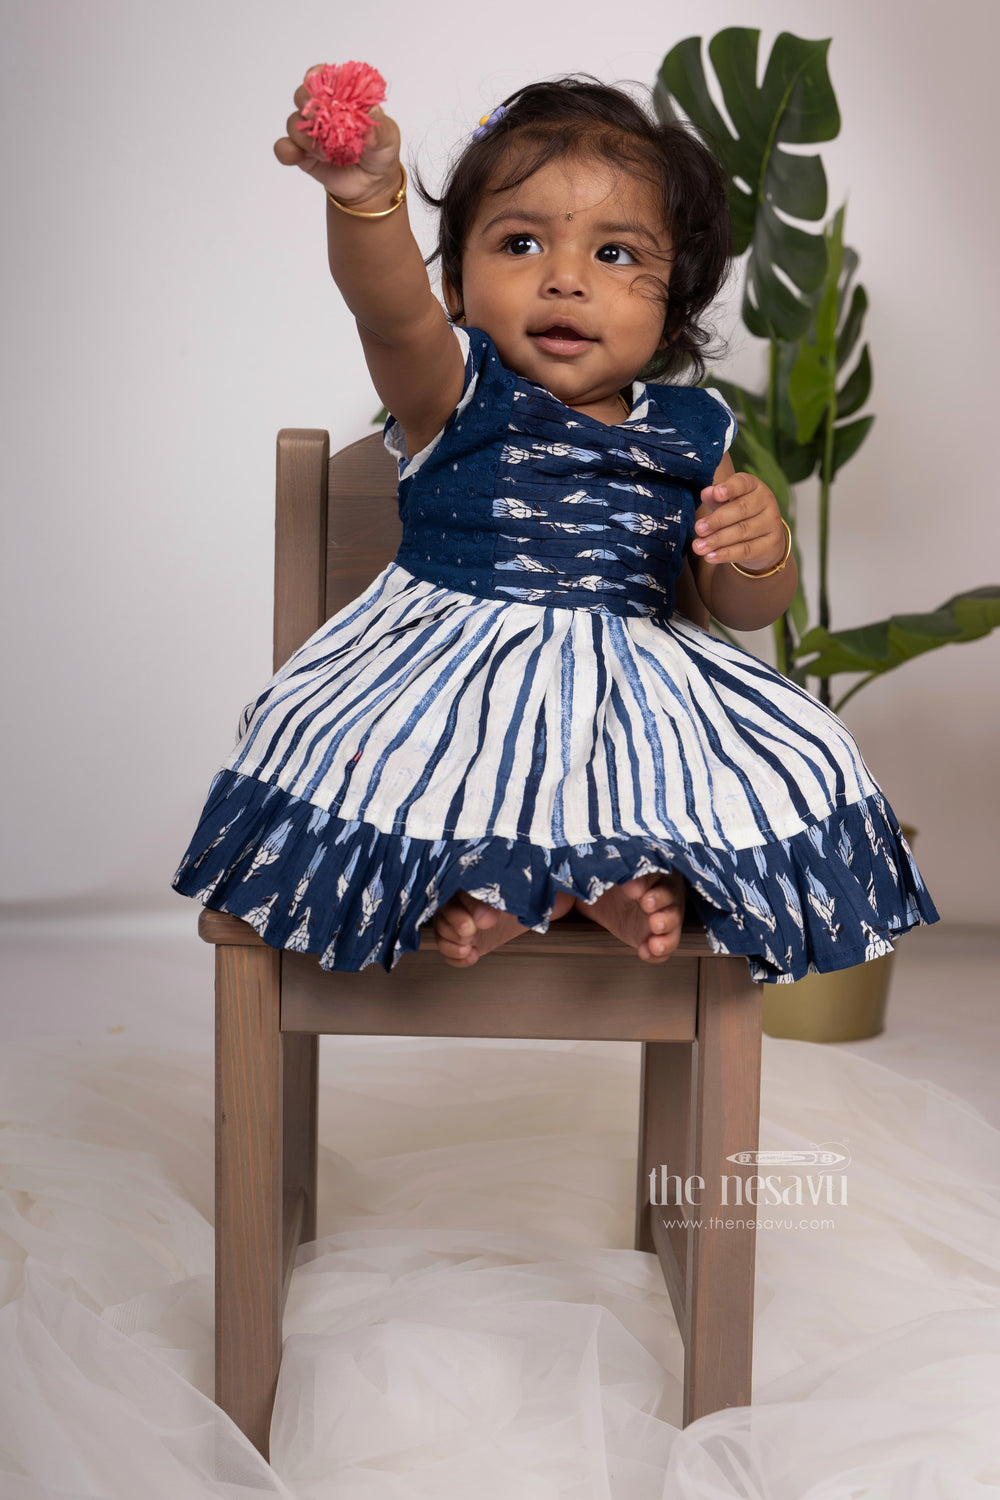 The Nesavu Baby Frock / Jhabla Navy Blue Pin-Tucked Pleated Designer Ruffle Ended Cotton Gown For Baby Girls psr silks Nesavu